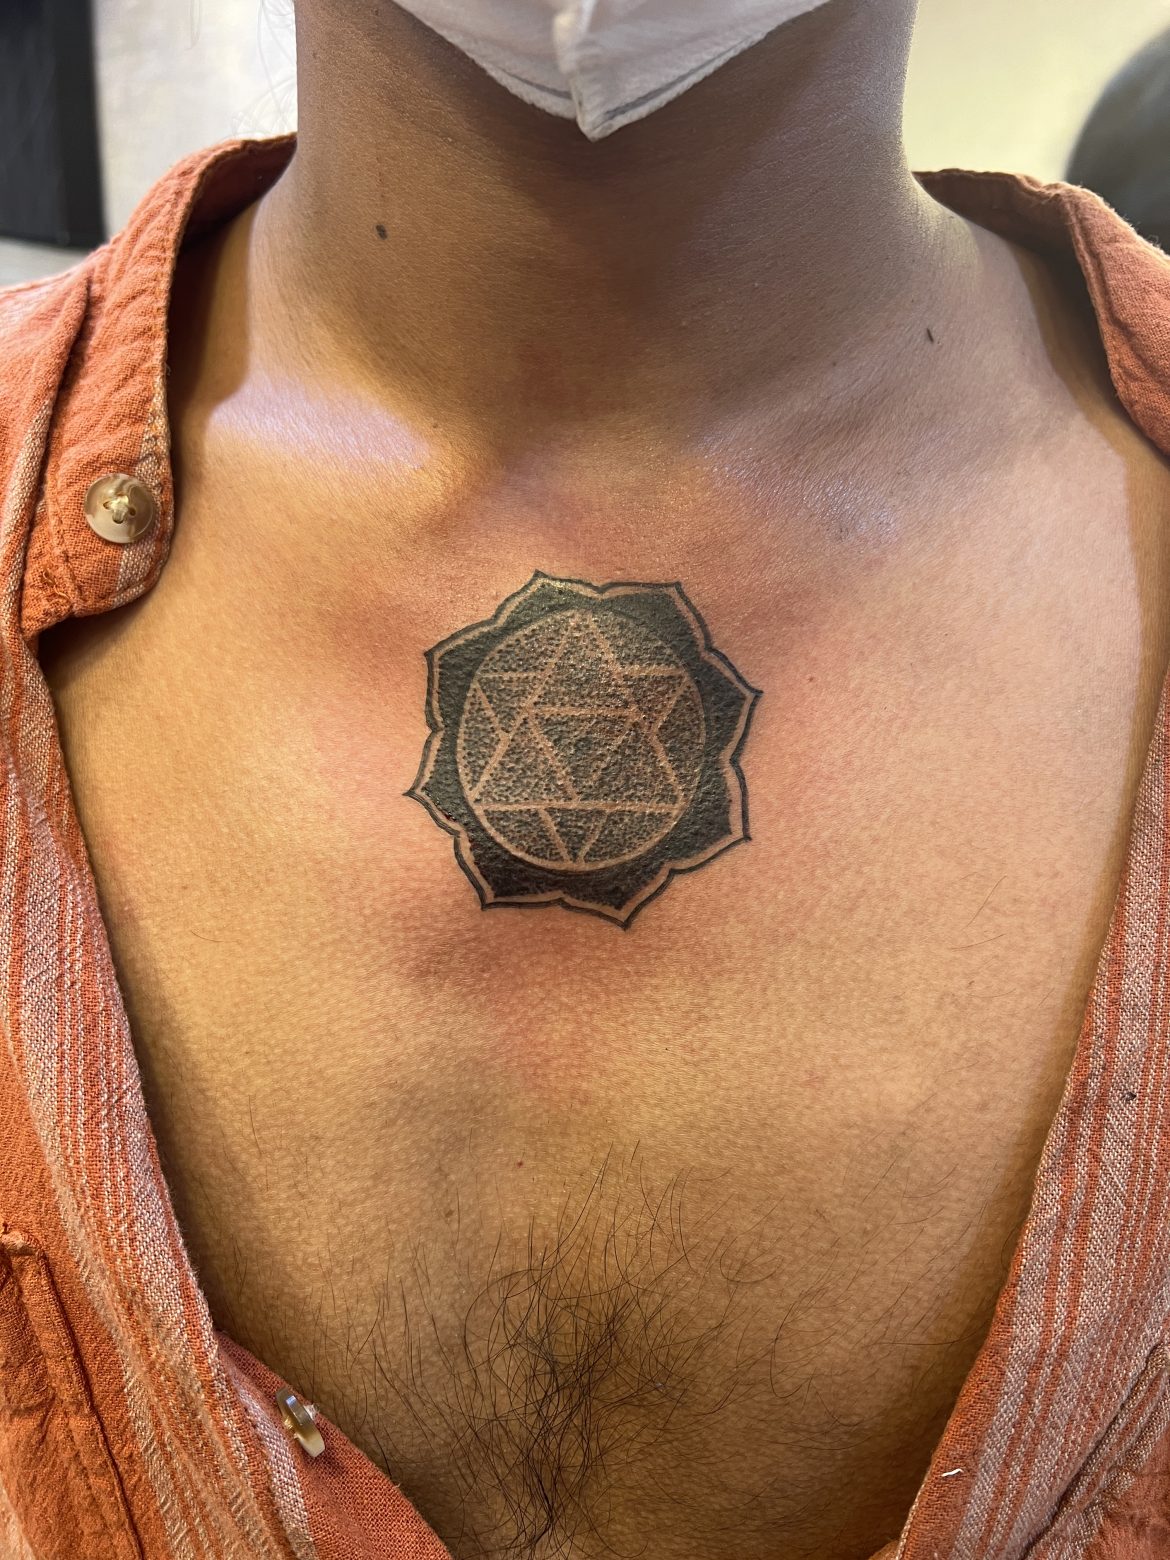 Tattoos by Brezinski 2014 part 2 :: Behance